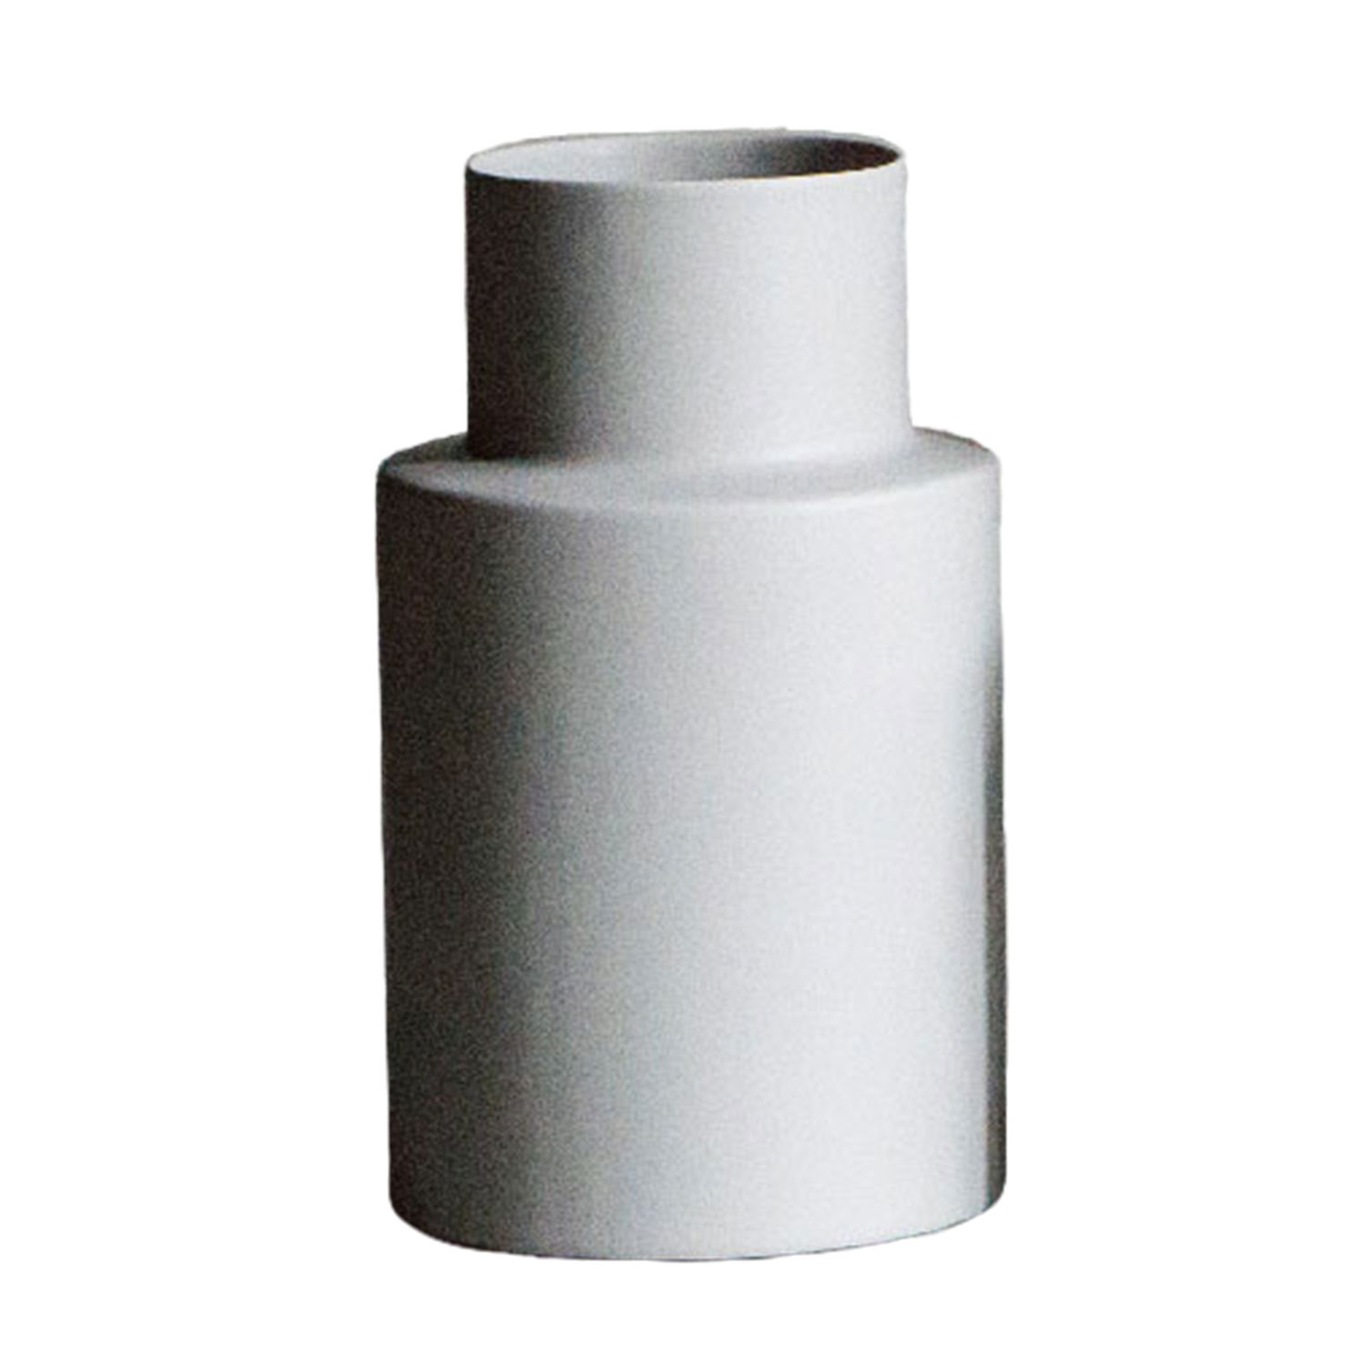 Oblong Topf/Vase Small, Mole